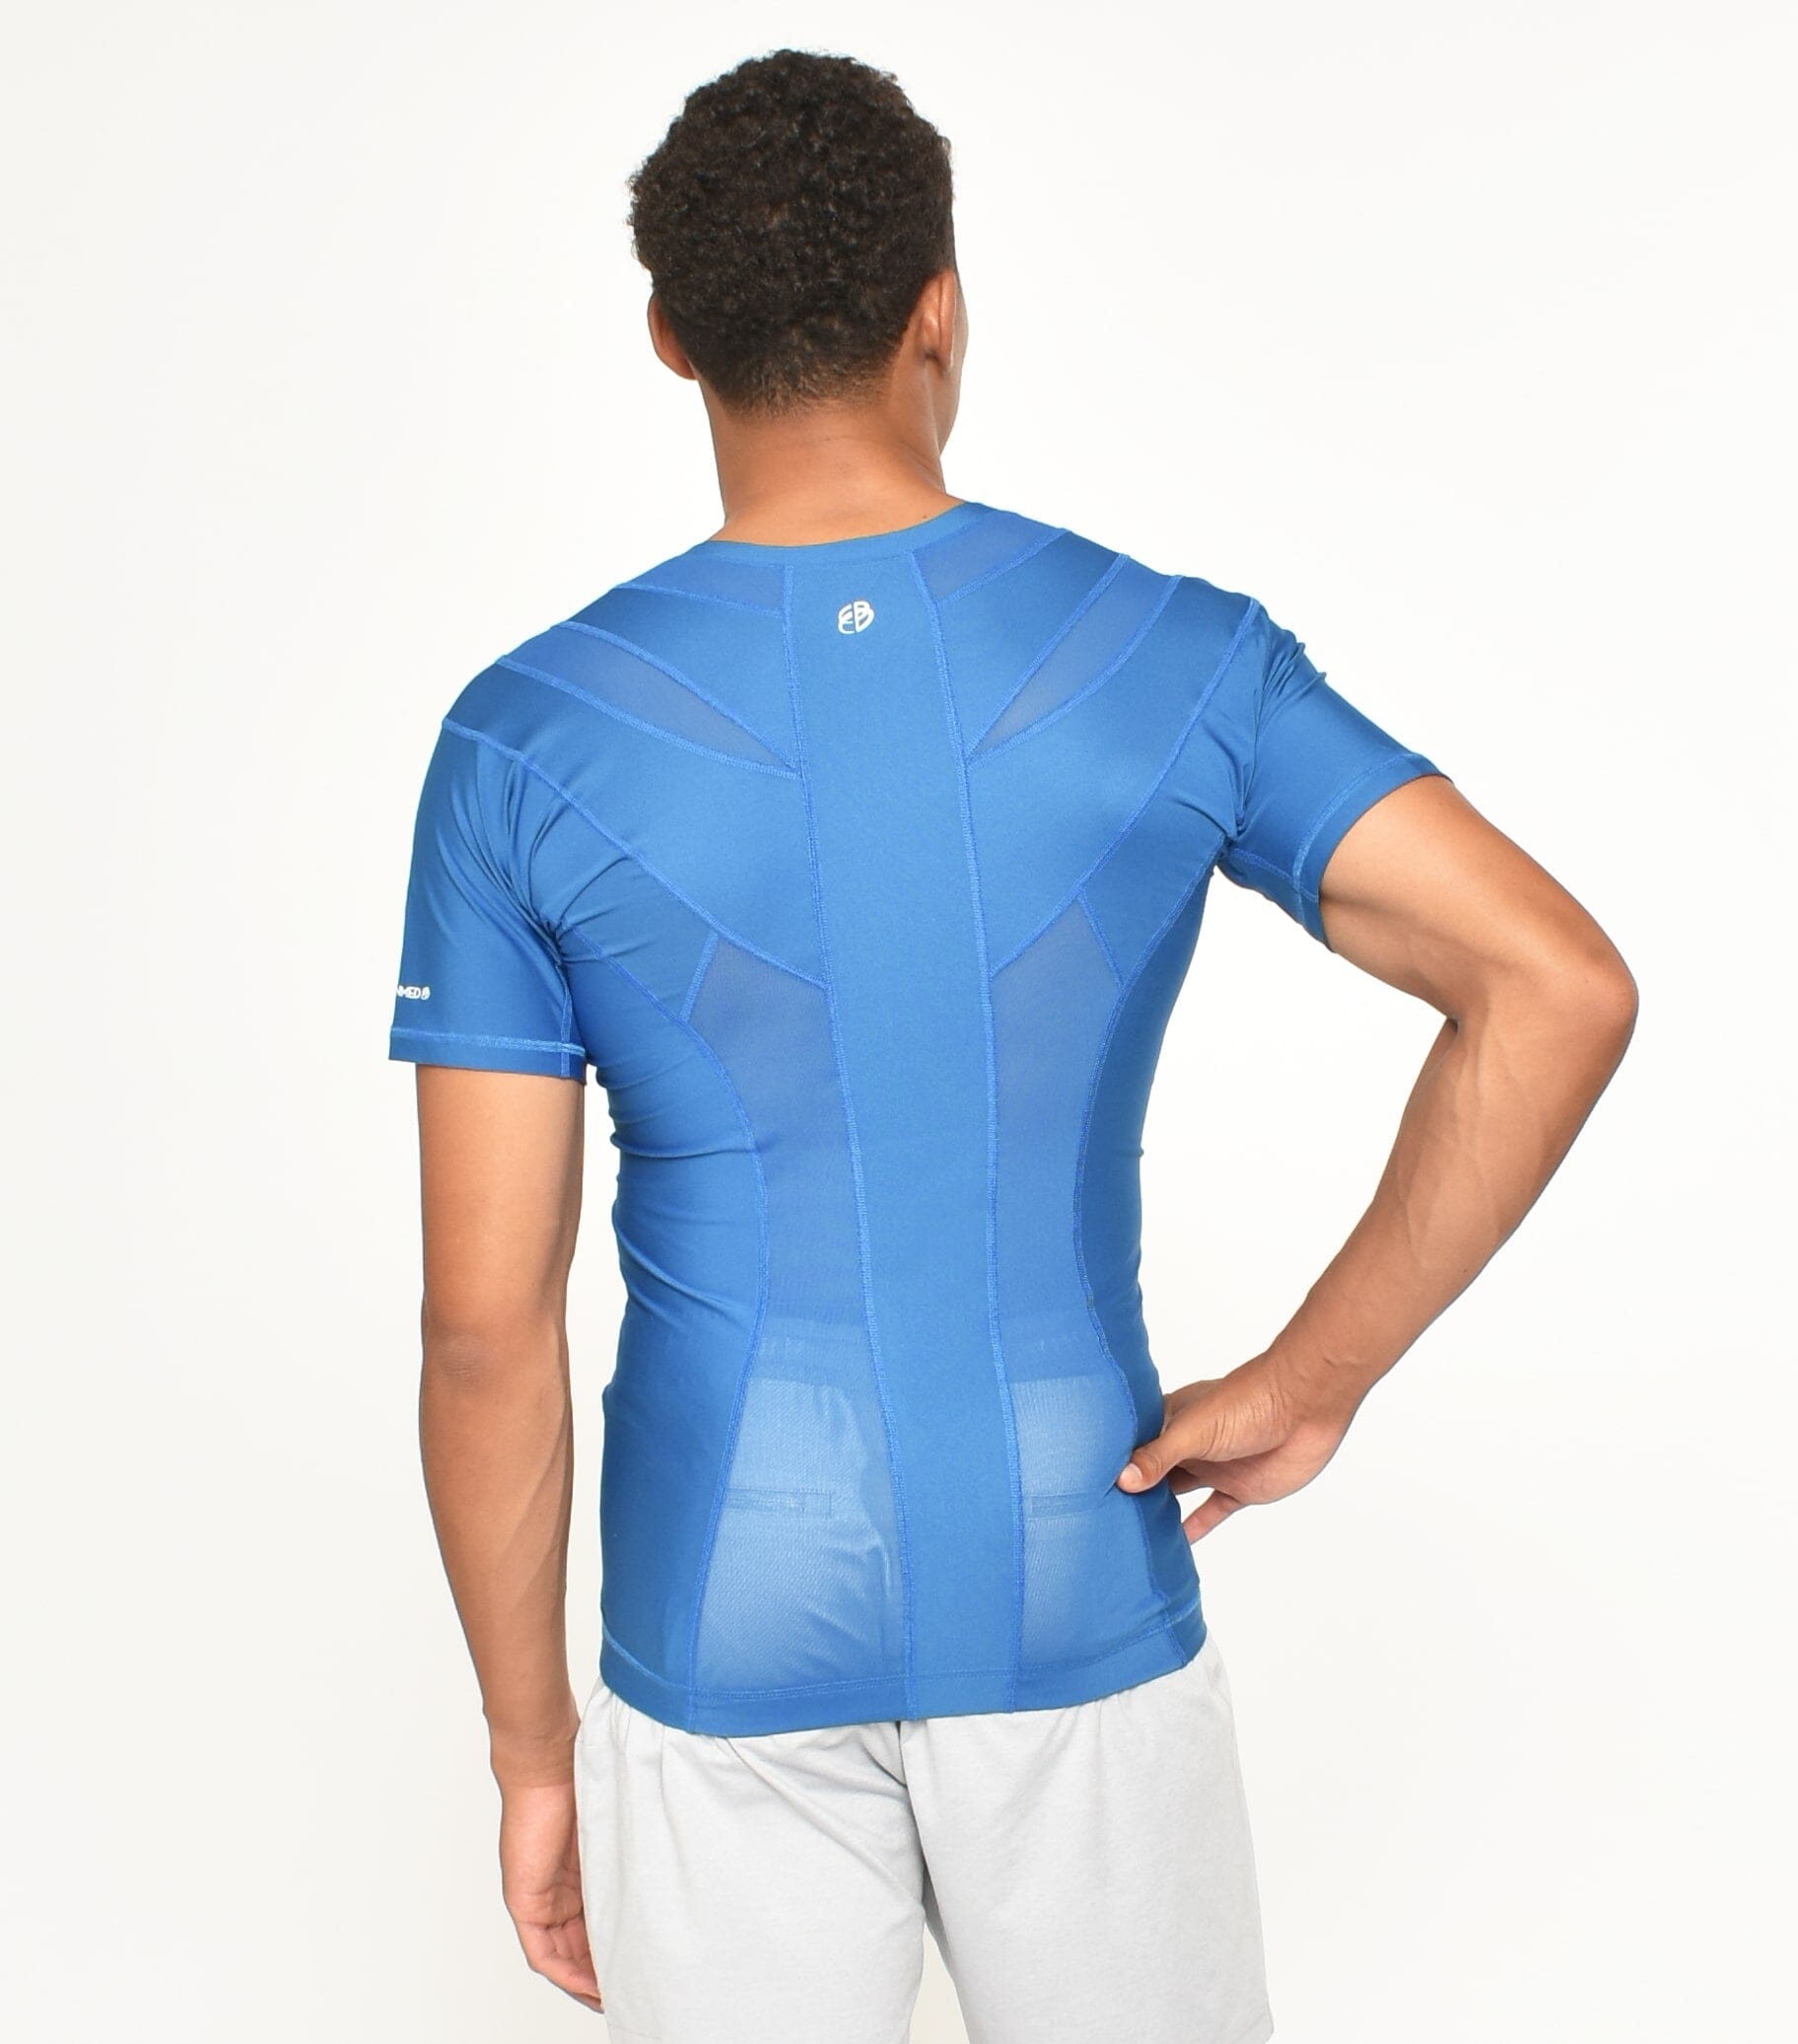 NWT Mens Size Large AlignMed Posture Correcting Shirt 2.0 Neuroband Shirt  White